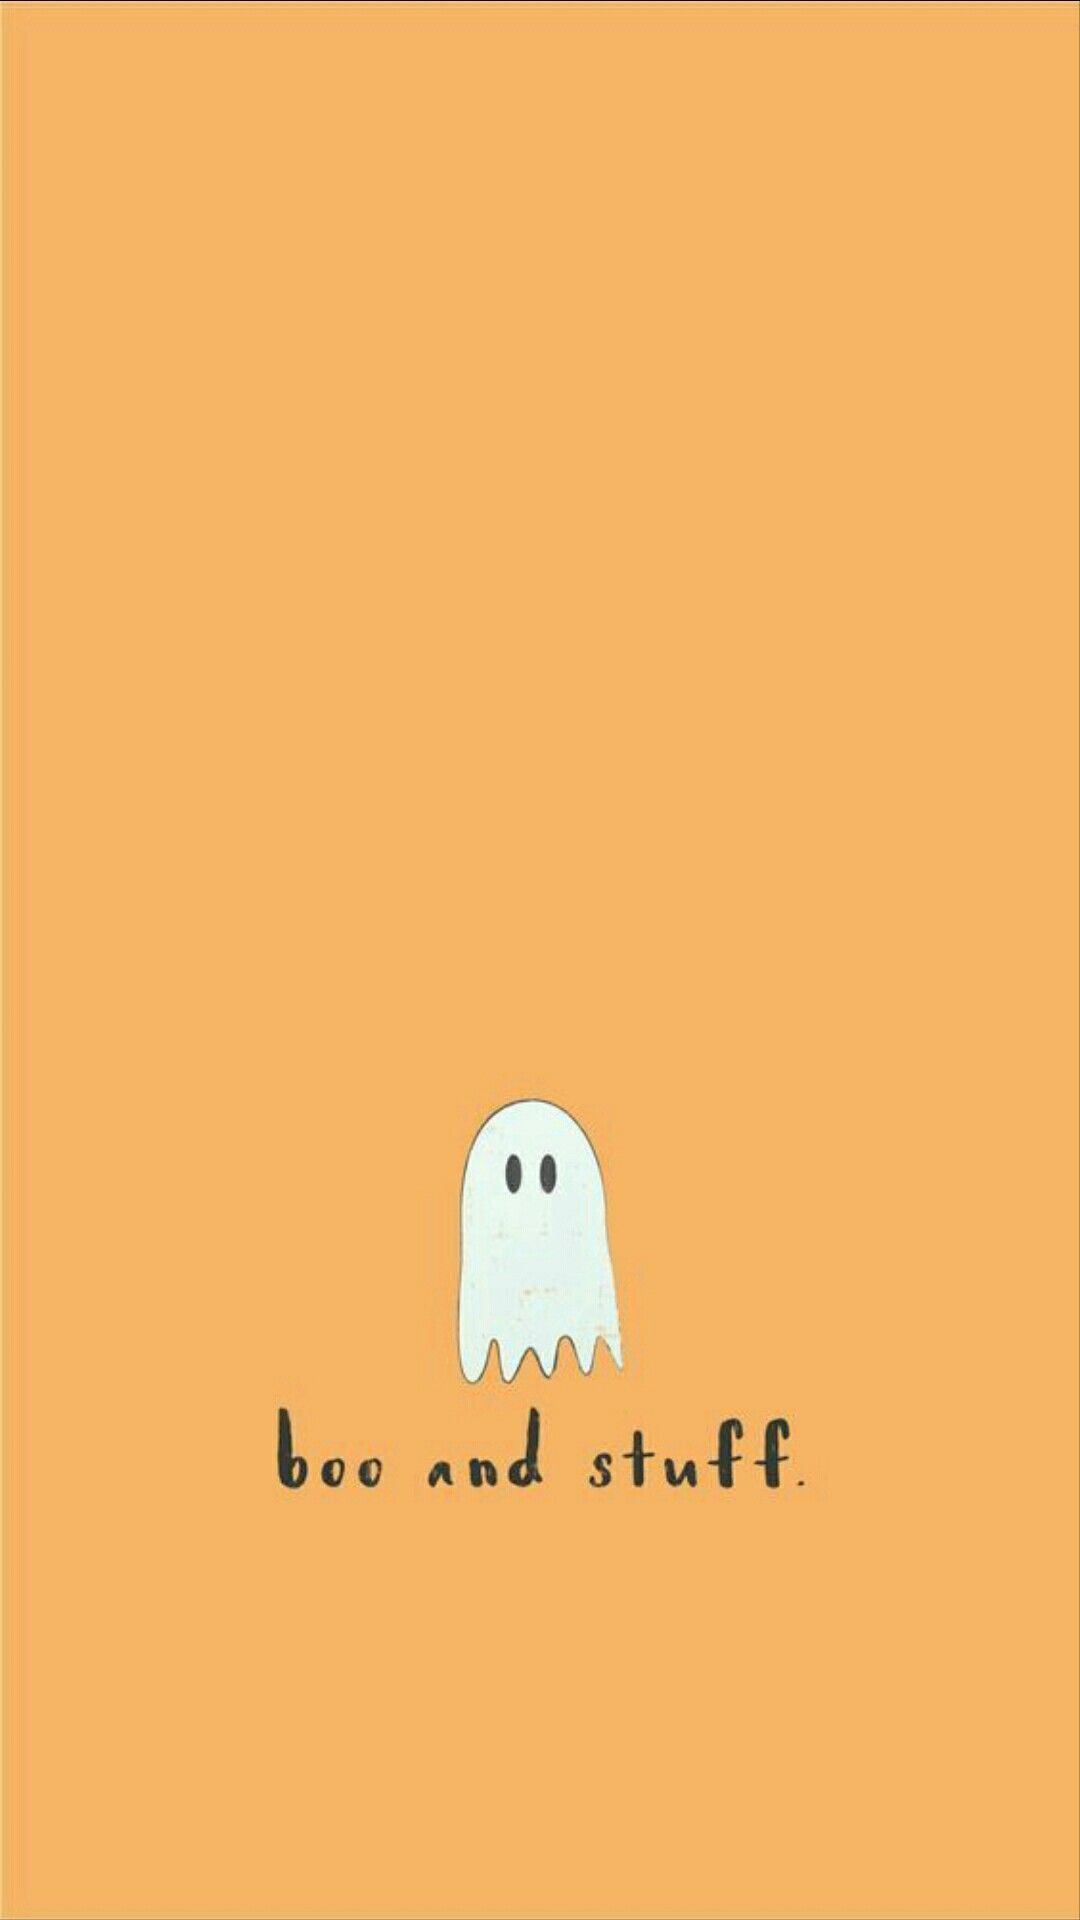 Boo and stuff. Halloween wallpaper iphone, Cute fall wallpaper, Fall wallpaper